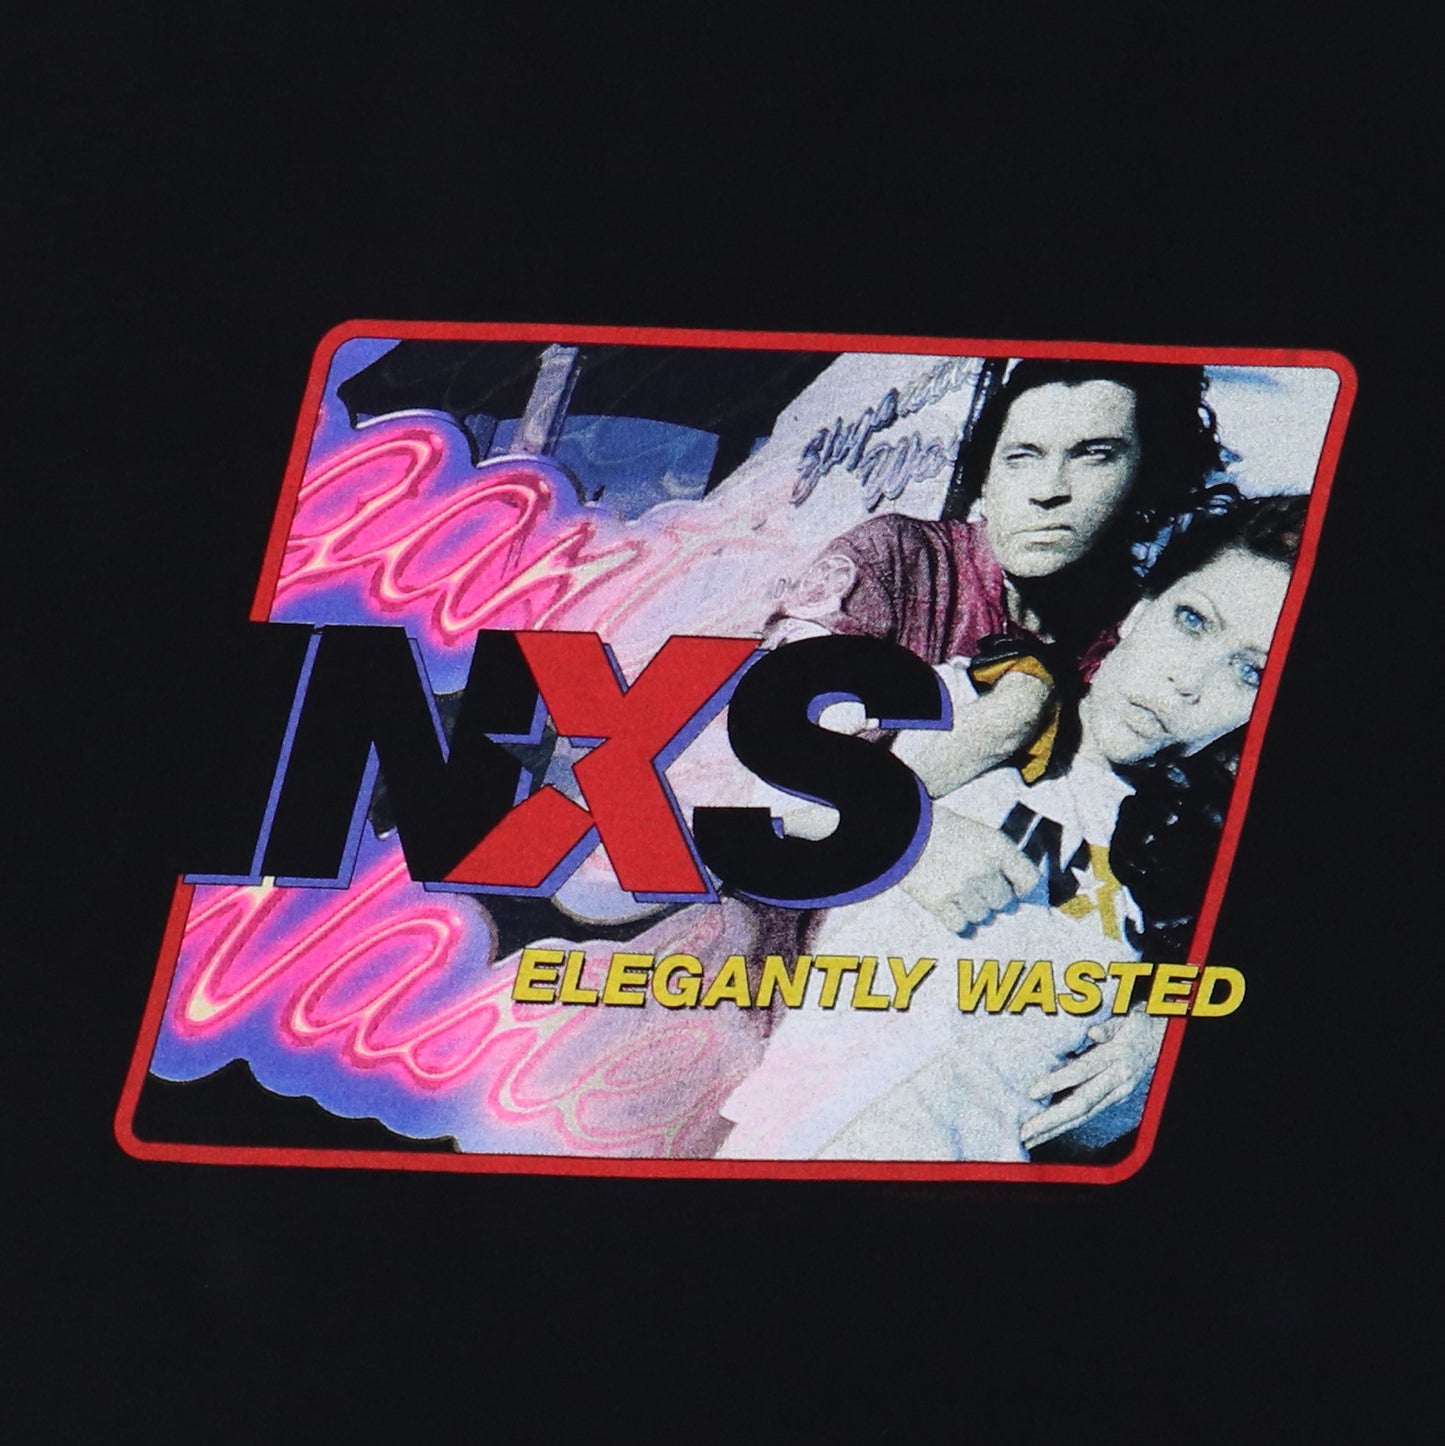 1997 INXS Elegantly Wasted Tour Shirt